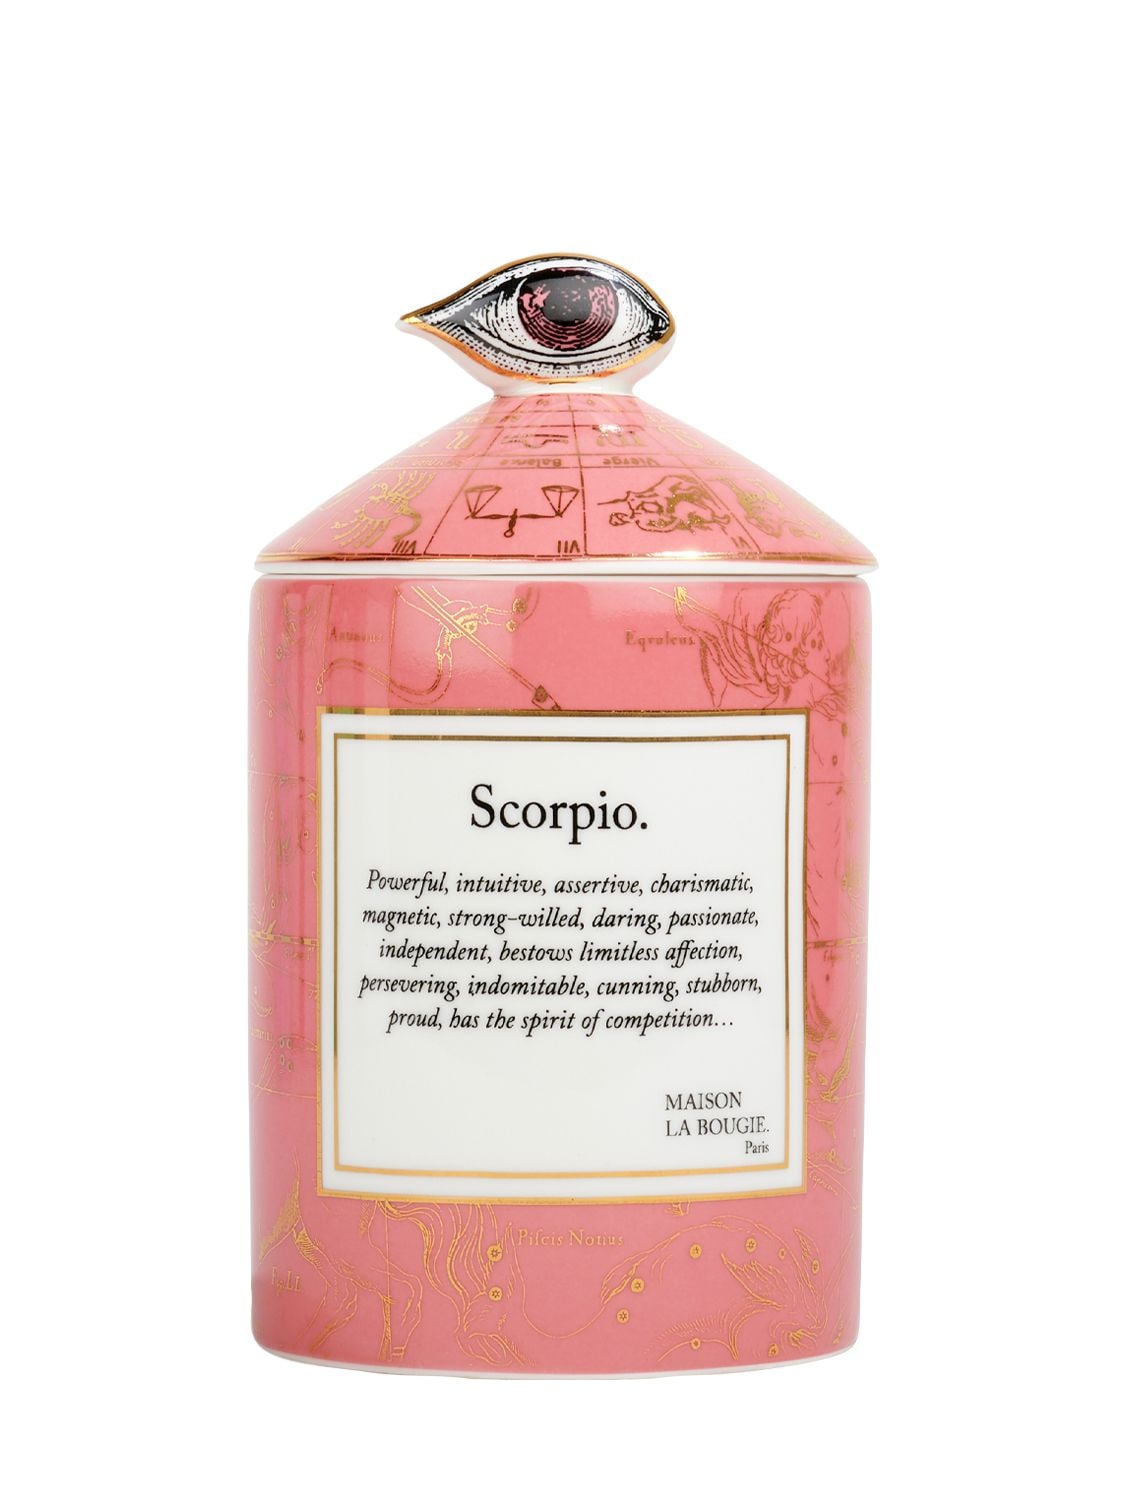 Maison La Bougie 300克scorpio Zodiac Scented Candle香氛蜡烛 In Pink